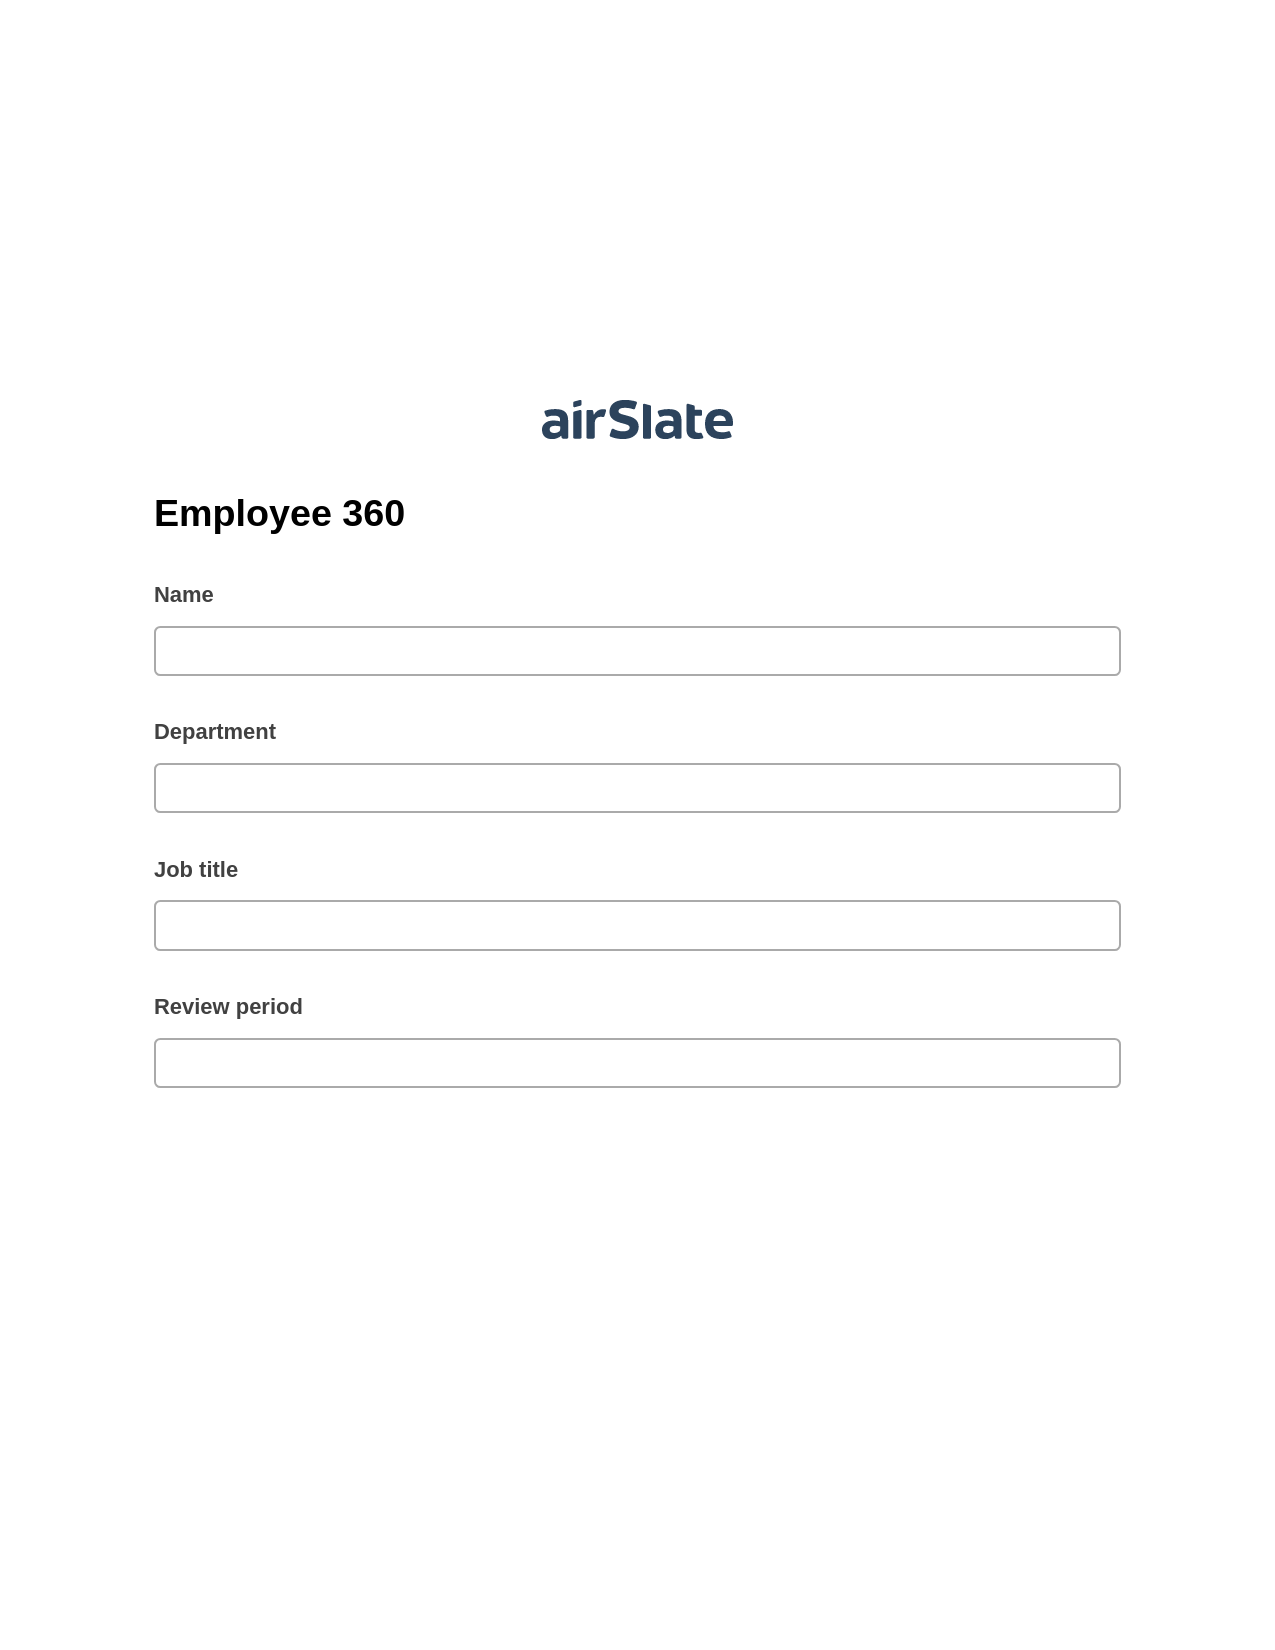 Employee 360 Prefill from NetSuite records, Invoke Salesforce Process Bot, Slack Notification Postfinish Bot